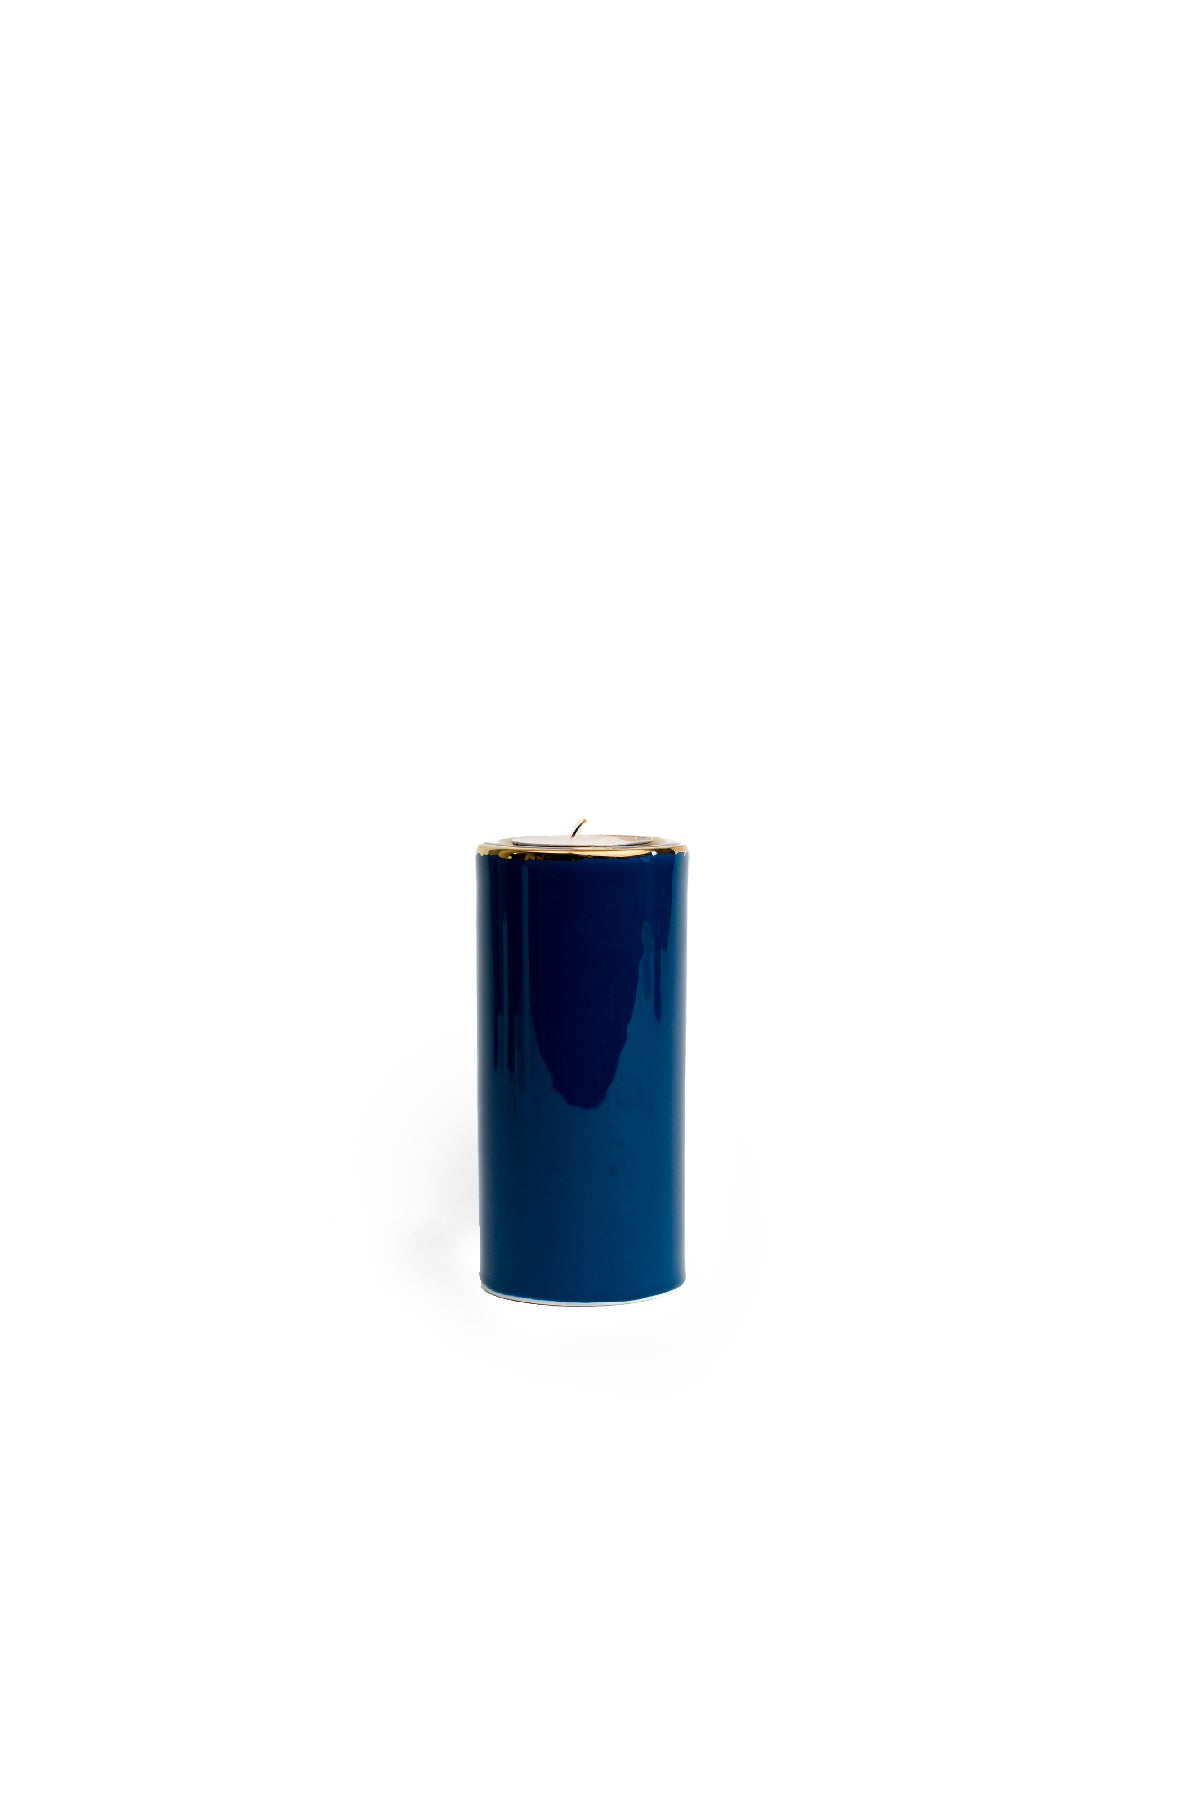 Medium Ceramic Cylinder Candle Holder